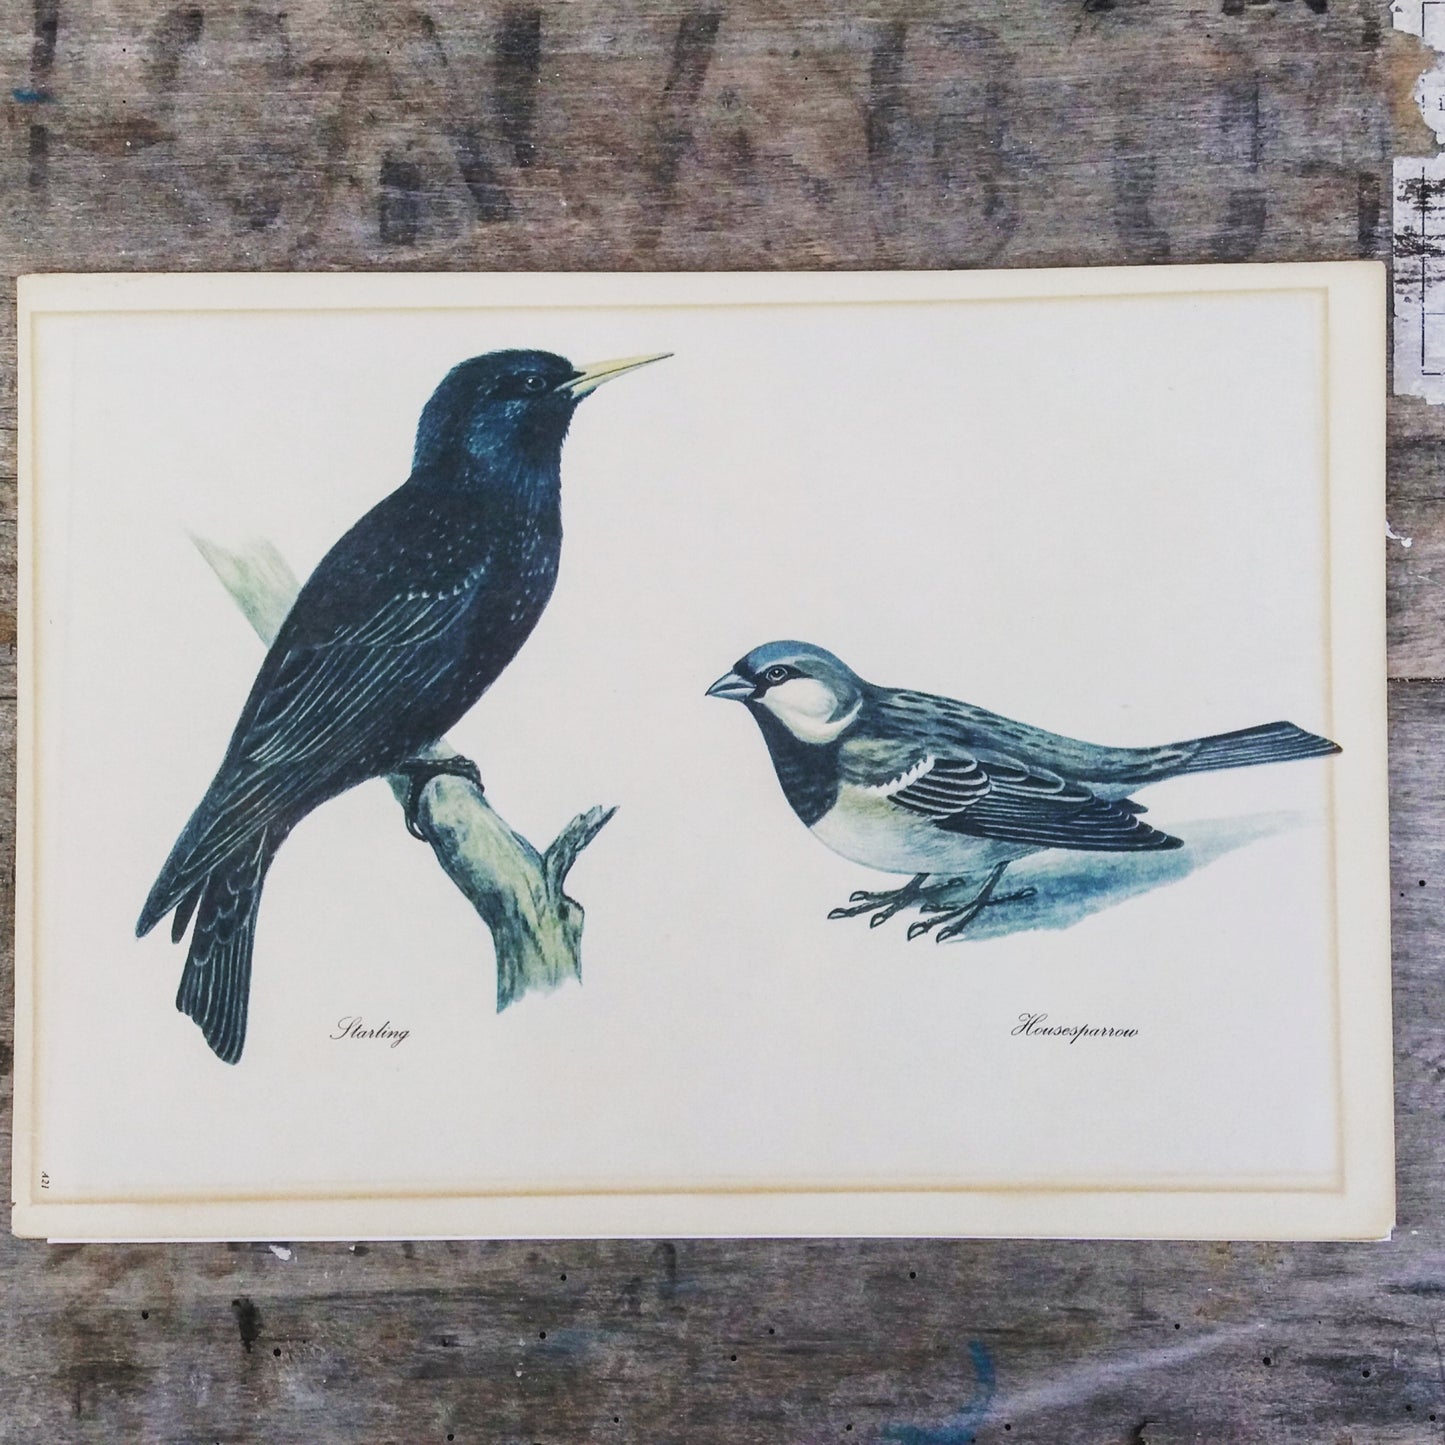 Vintage original botanical British bird book illustration prints